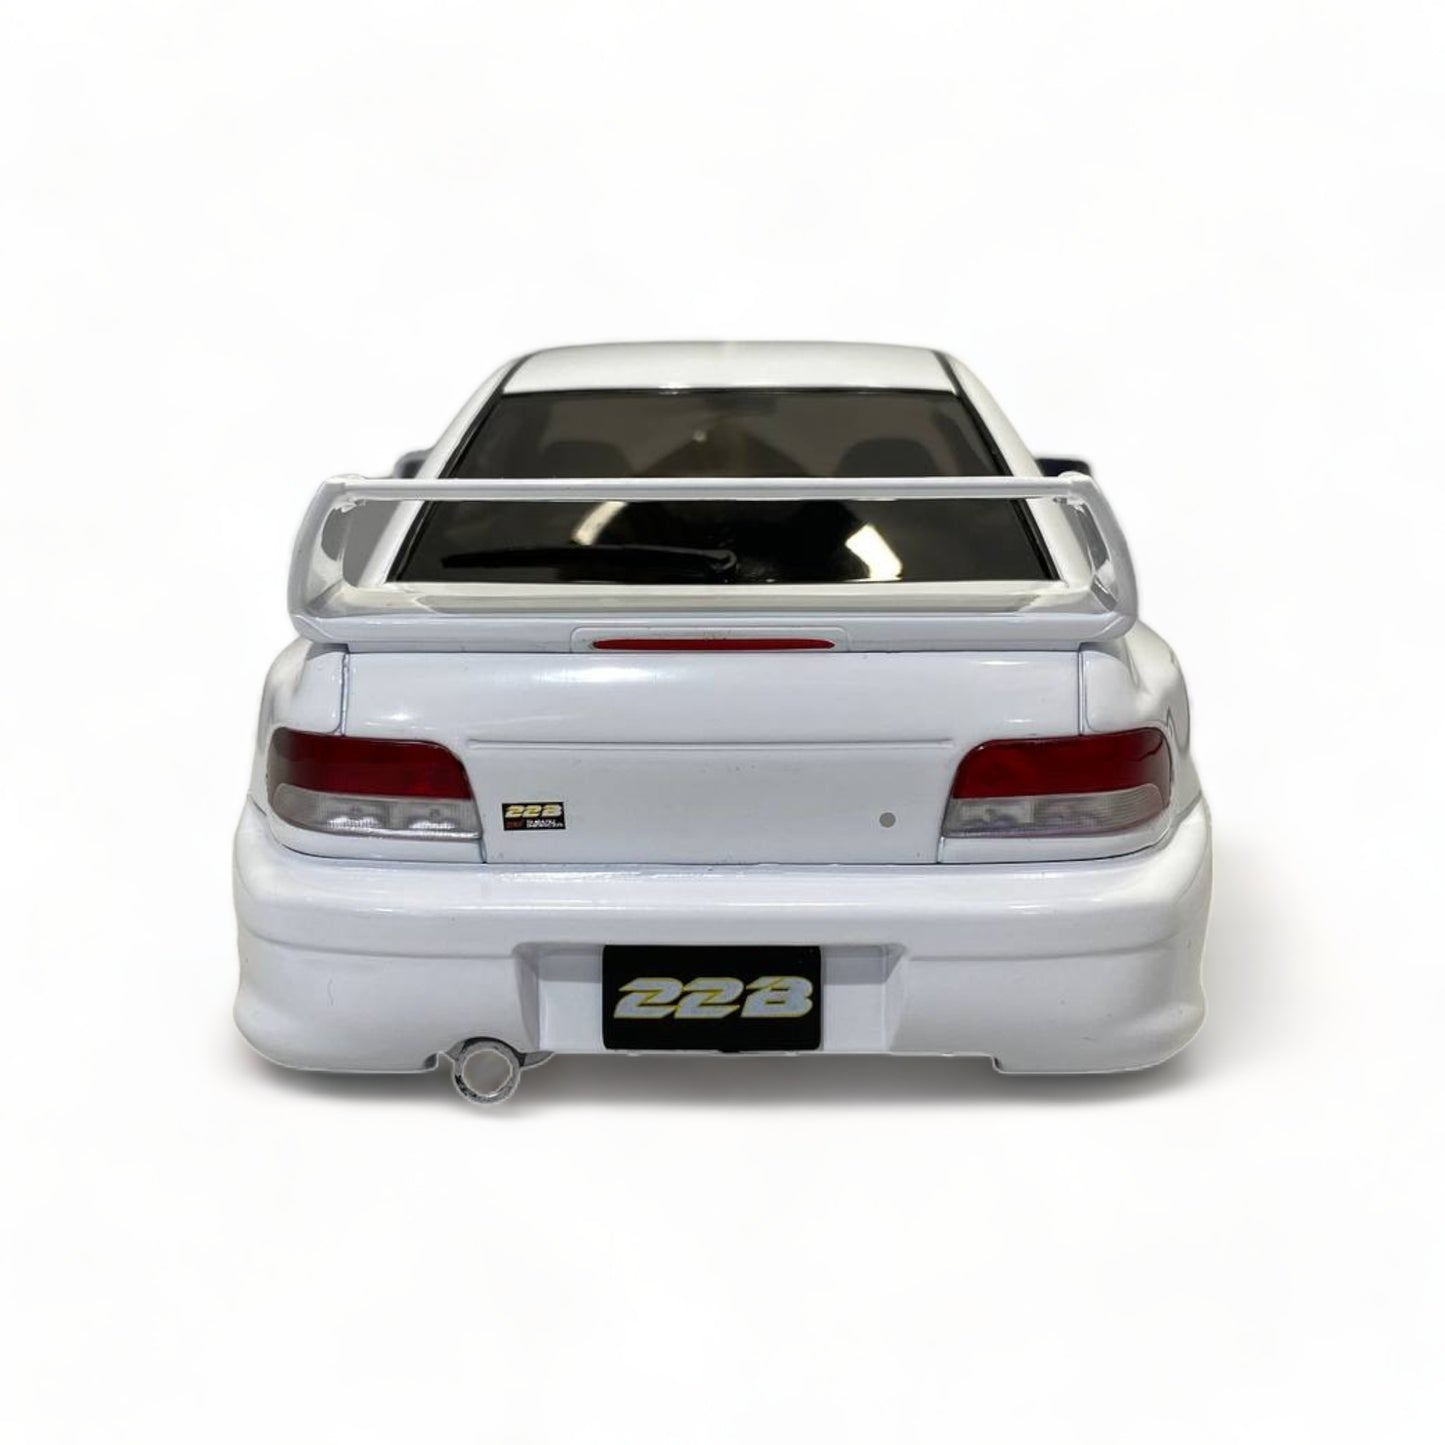 1/18 Solido Subaru Impreza 22B (1998) - Metal Diecast, Classic White Model Car|Sold in Dturman.com Dubai UAE.